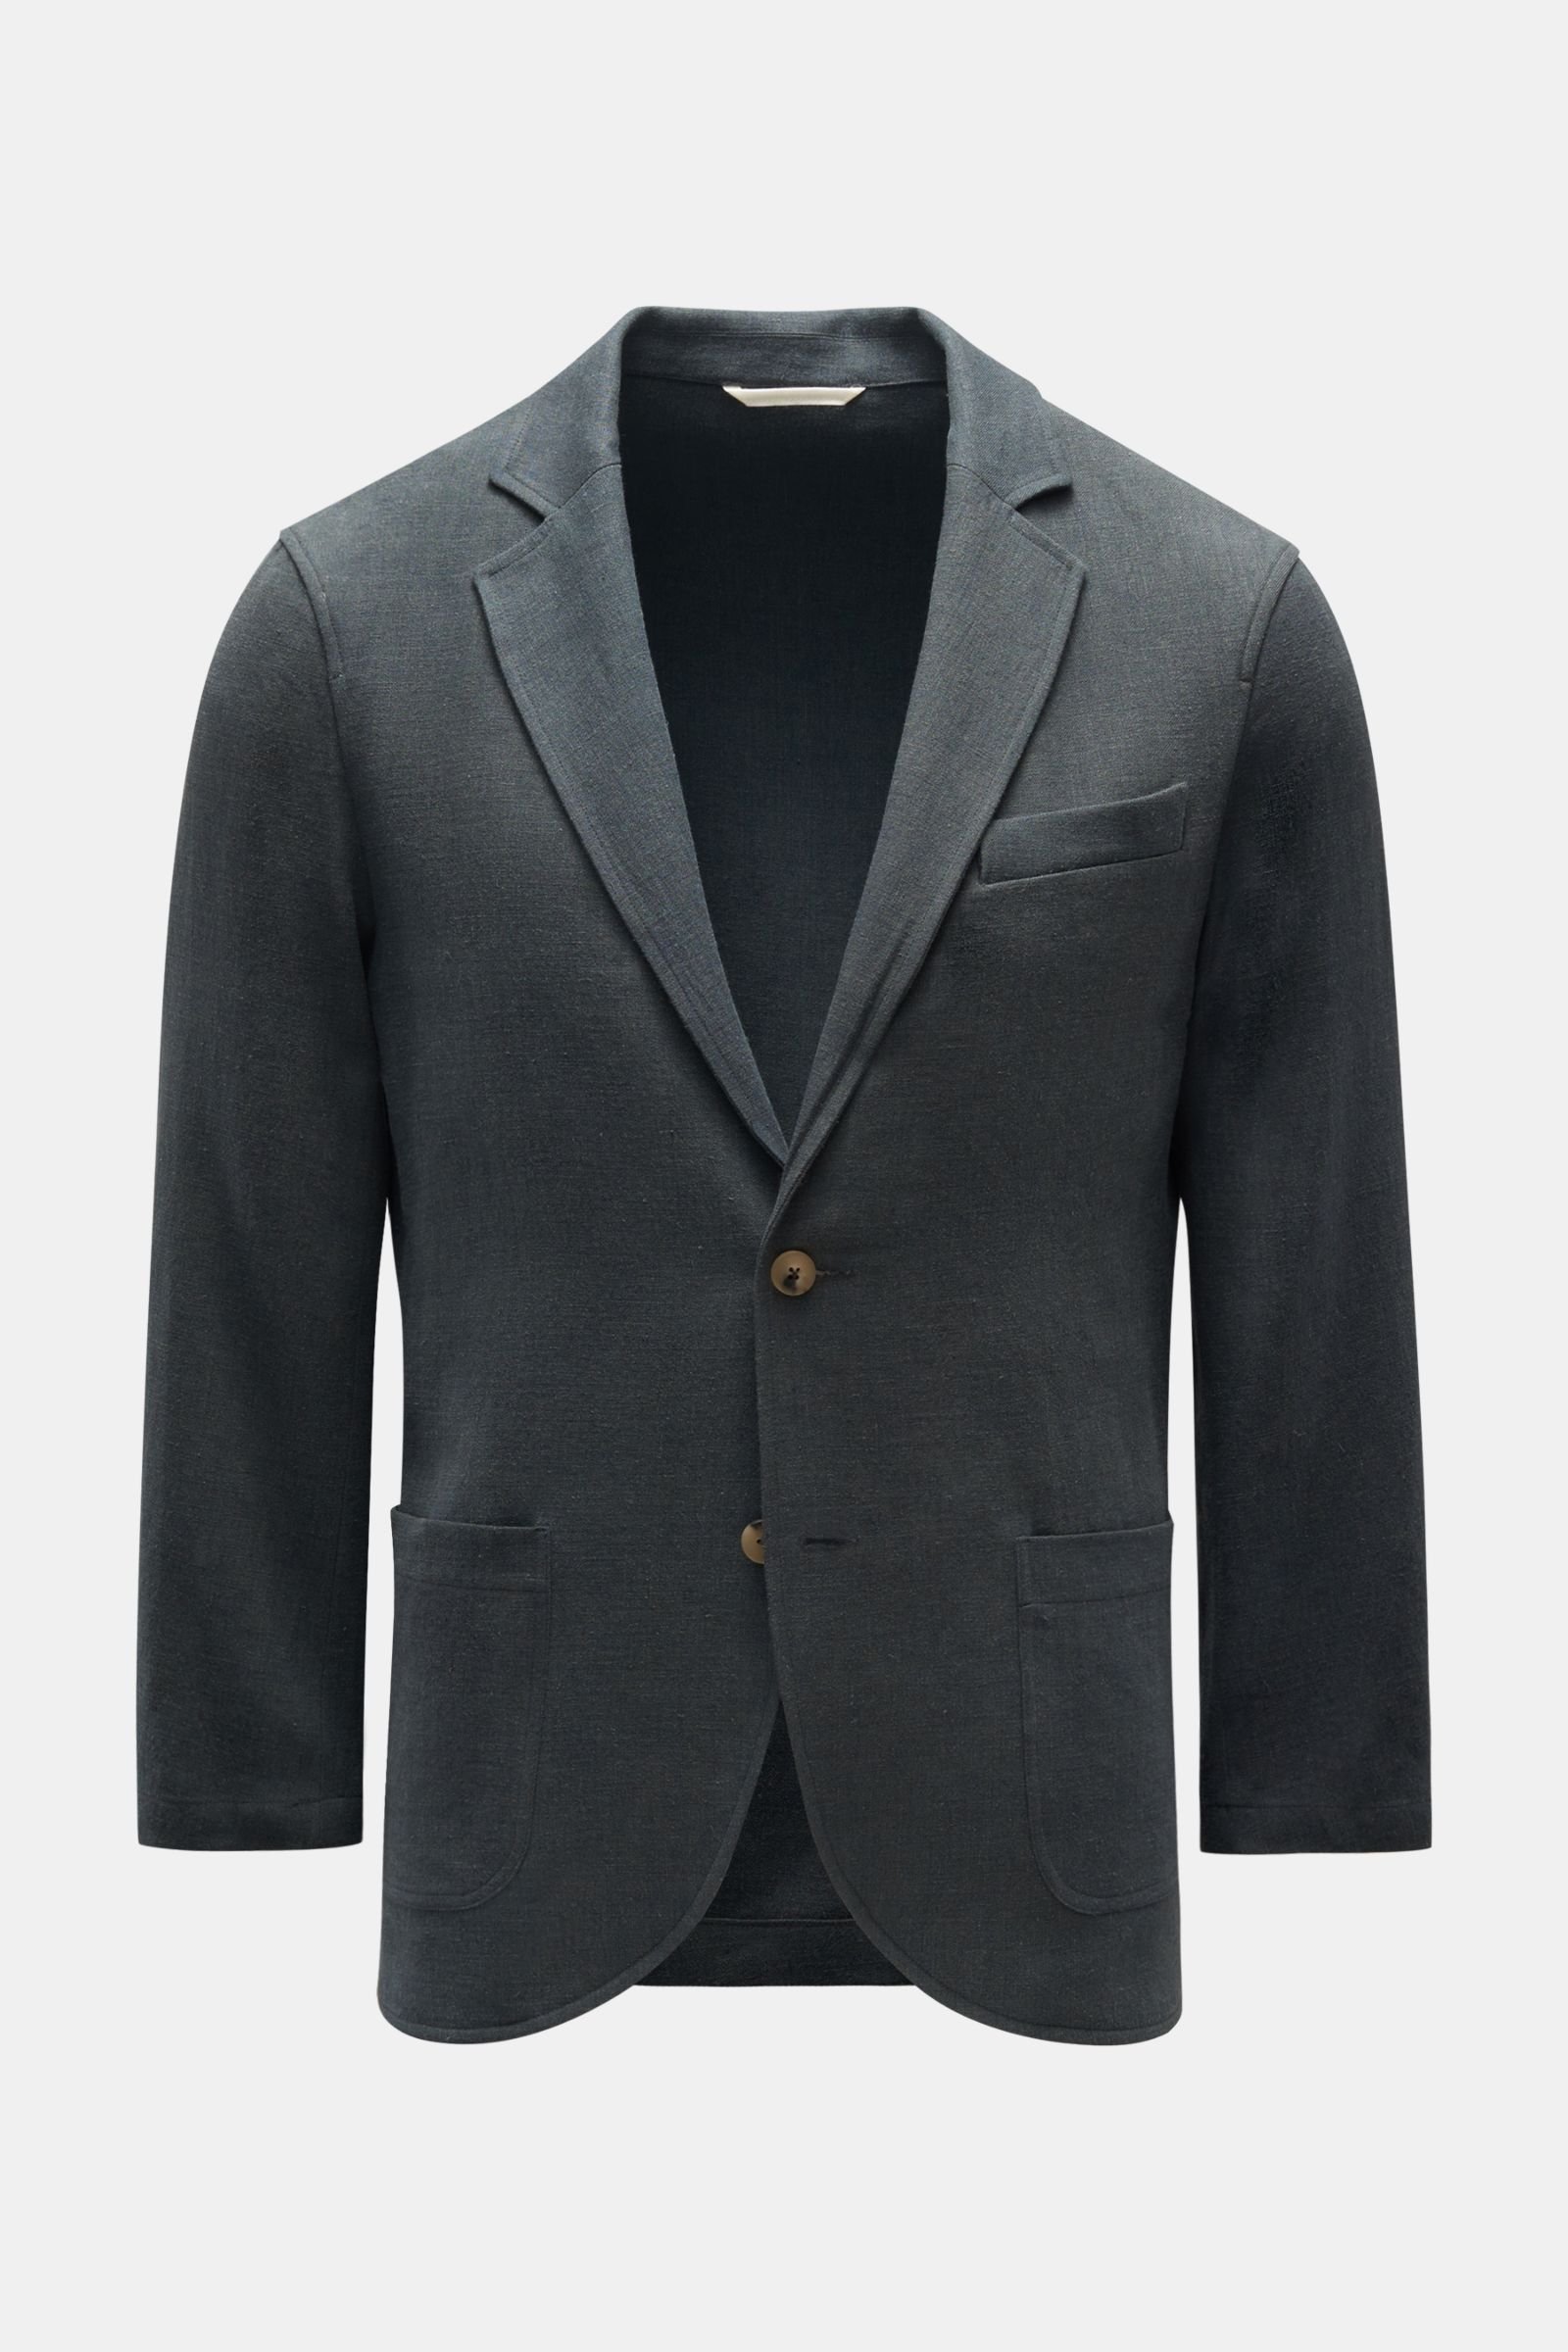 Smart-casual jacket 'Sports Jacket' dark grey